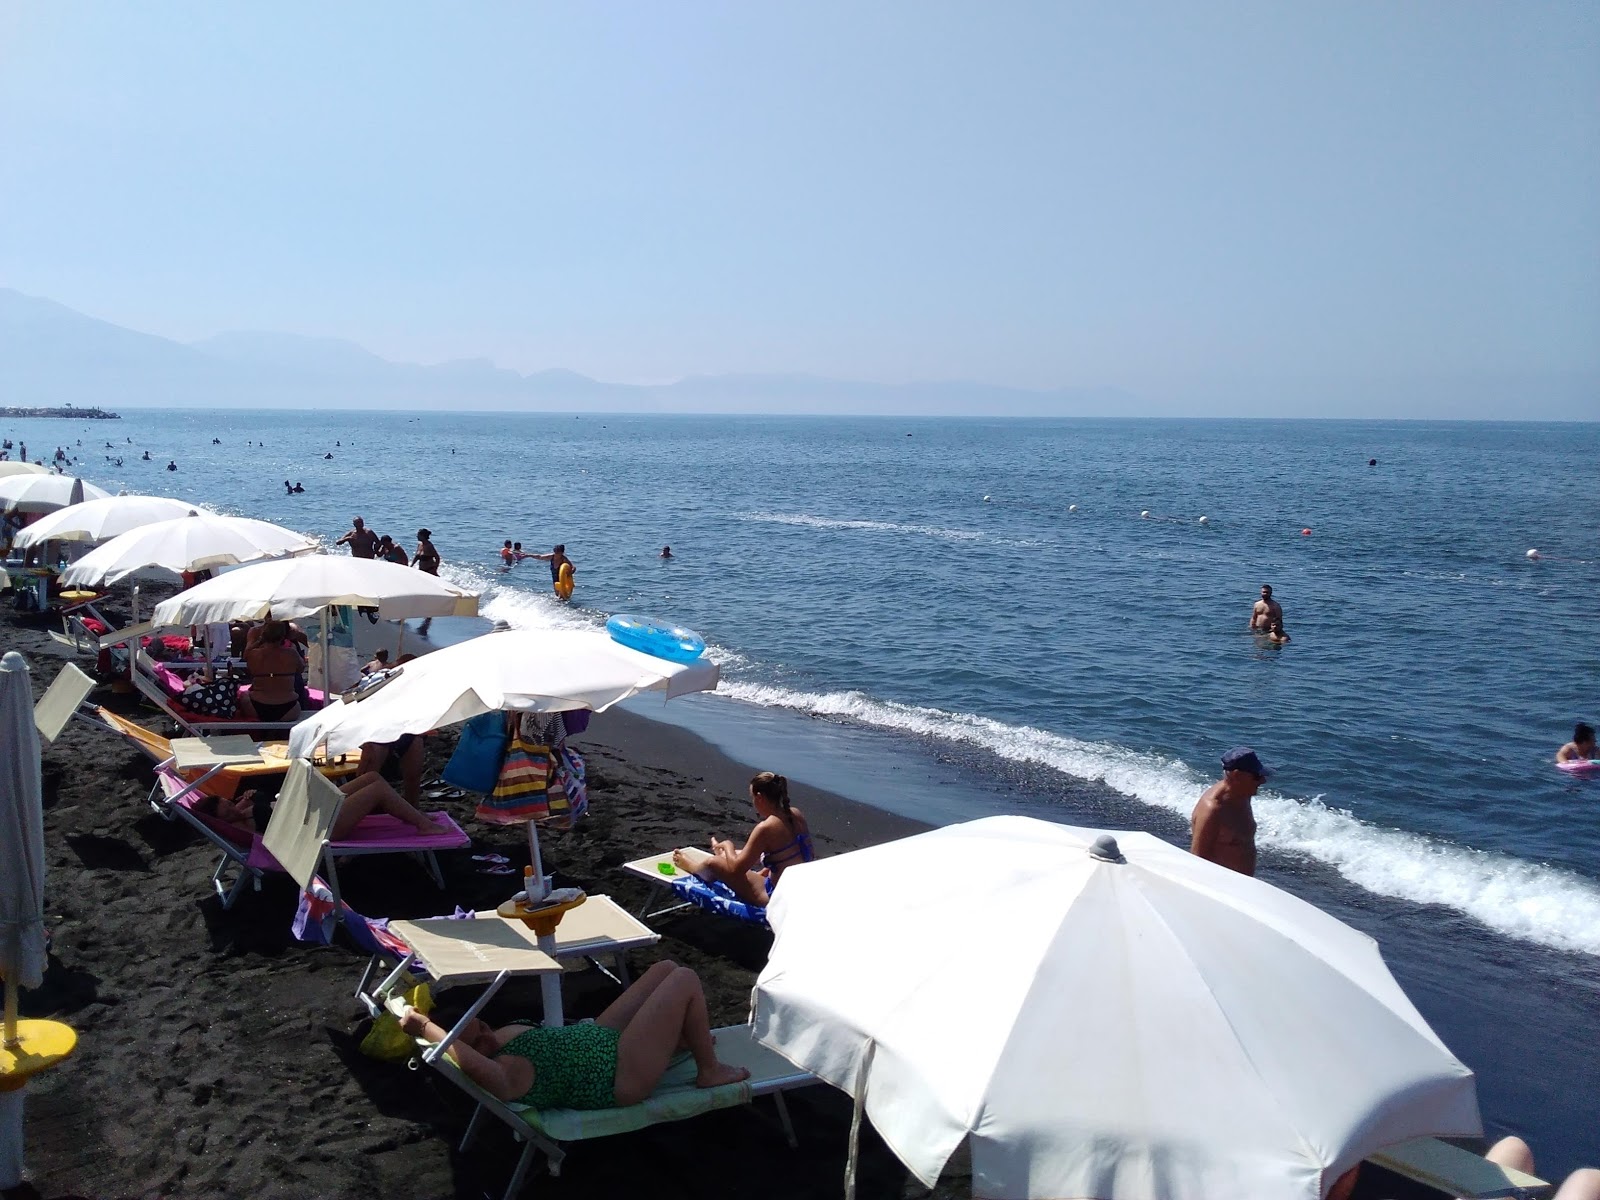 Spiaggia di via Litoranea'in fotoğrafı geniş plaj ile birlikte